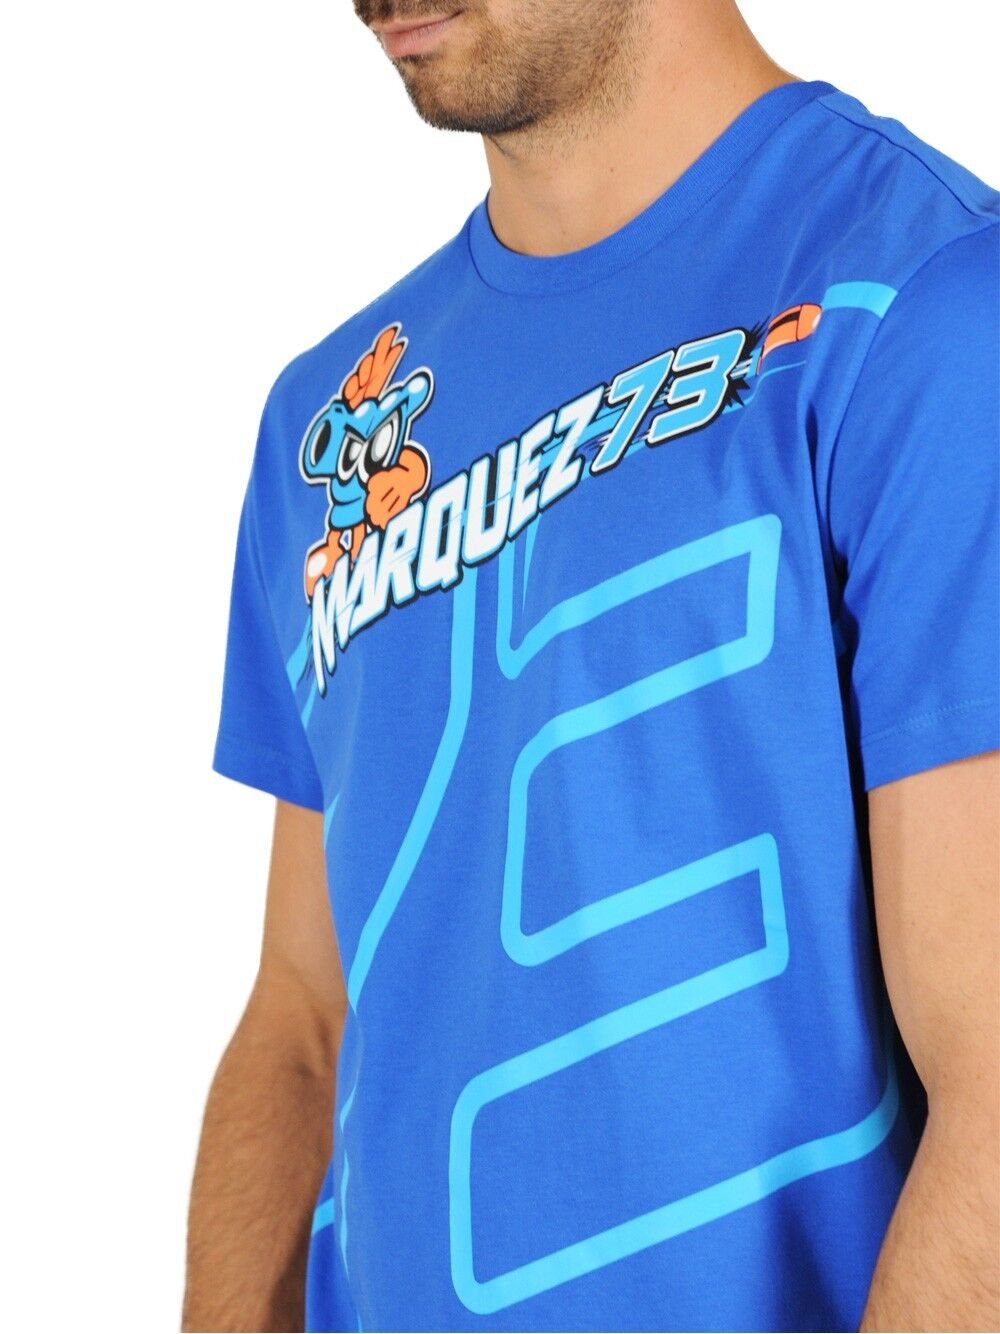 New Official Alex Marquez T Shirt - 16 32003